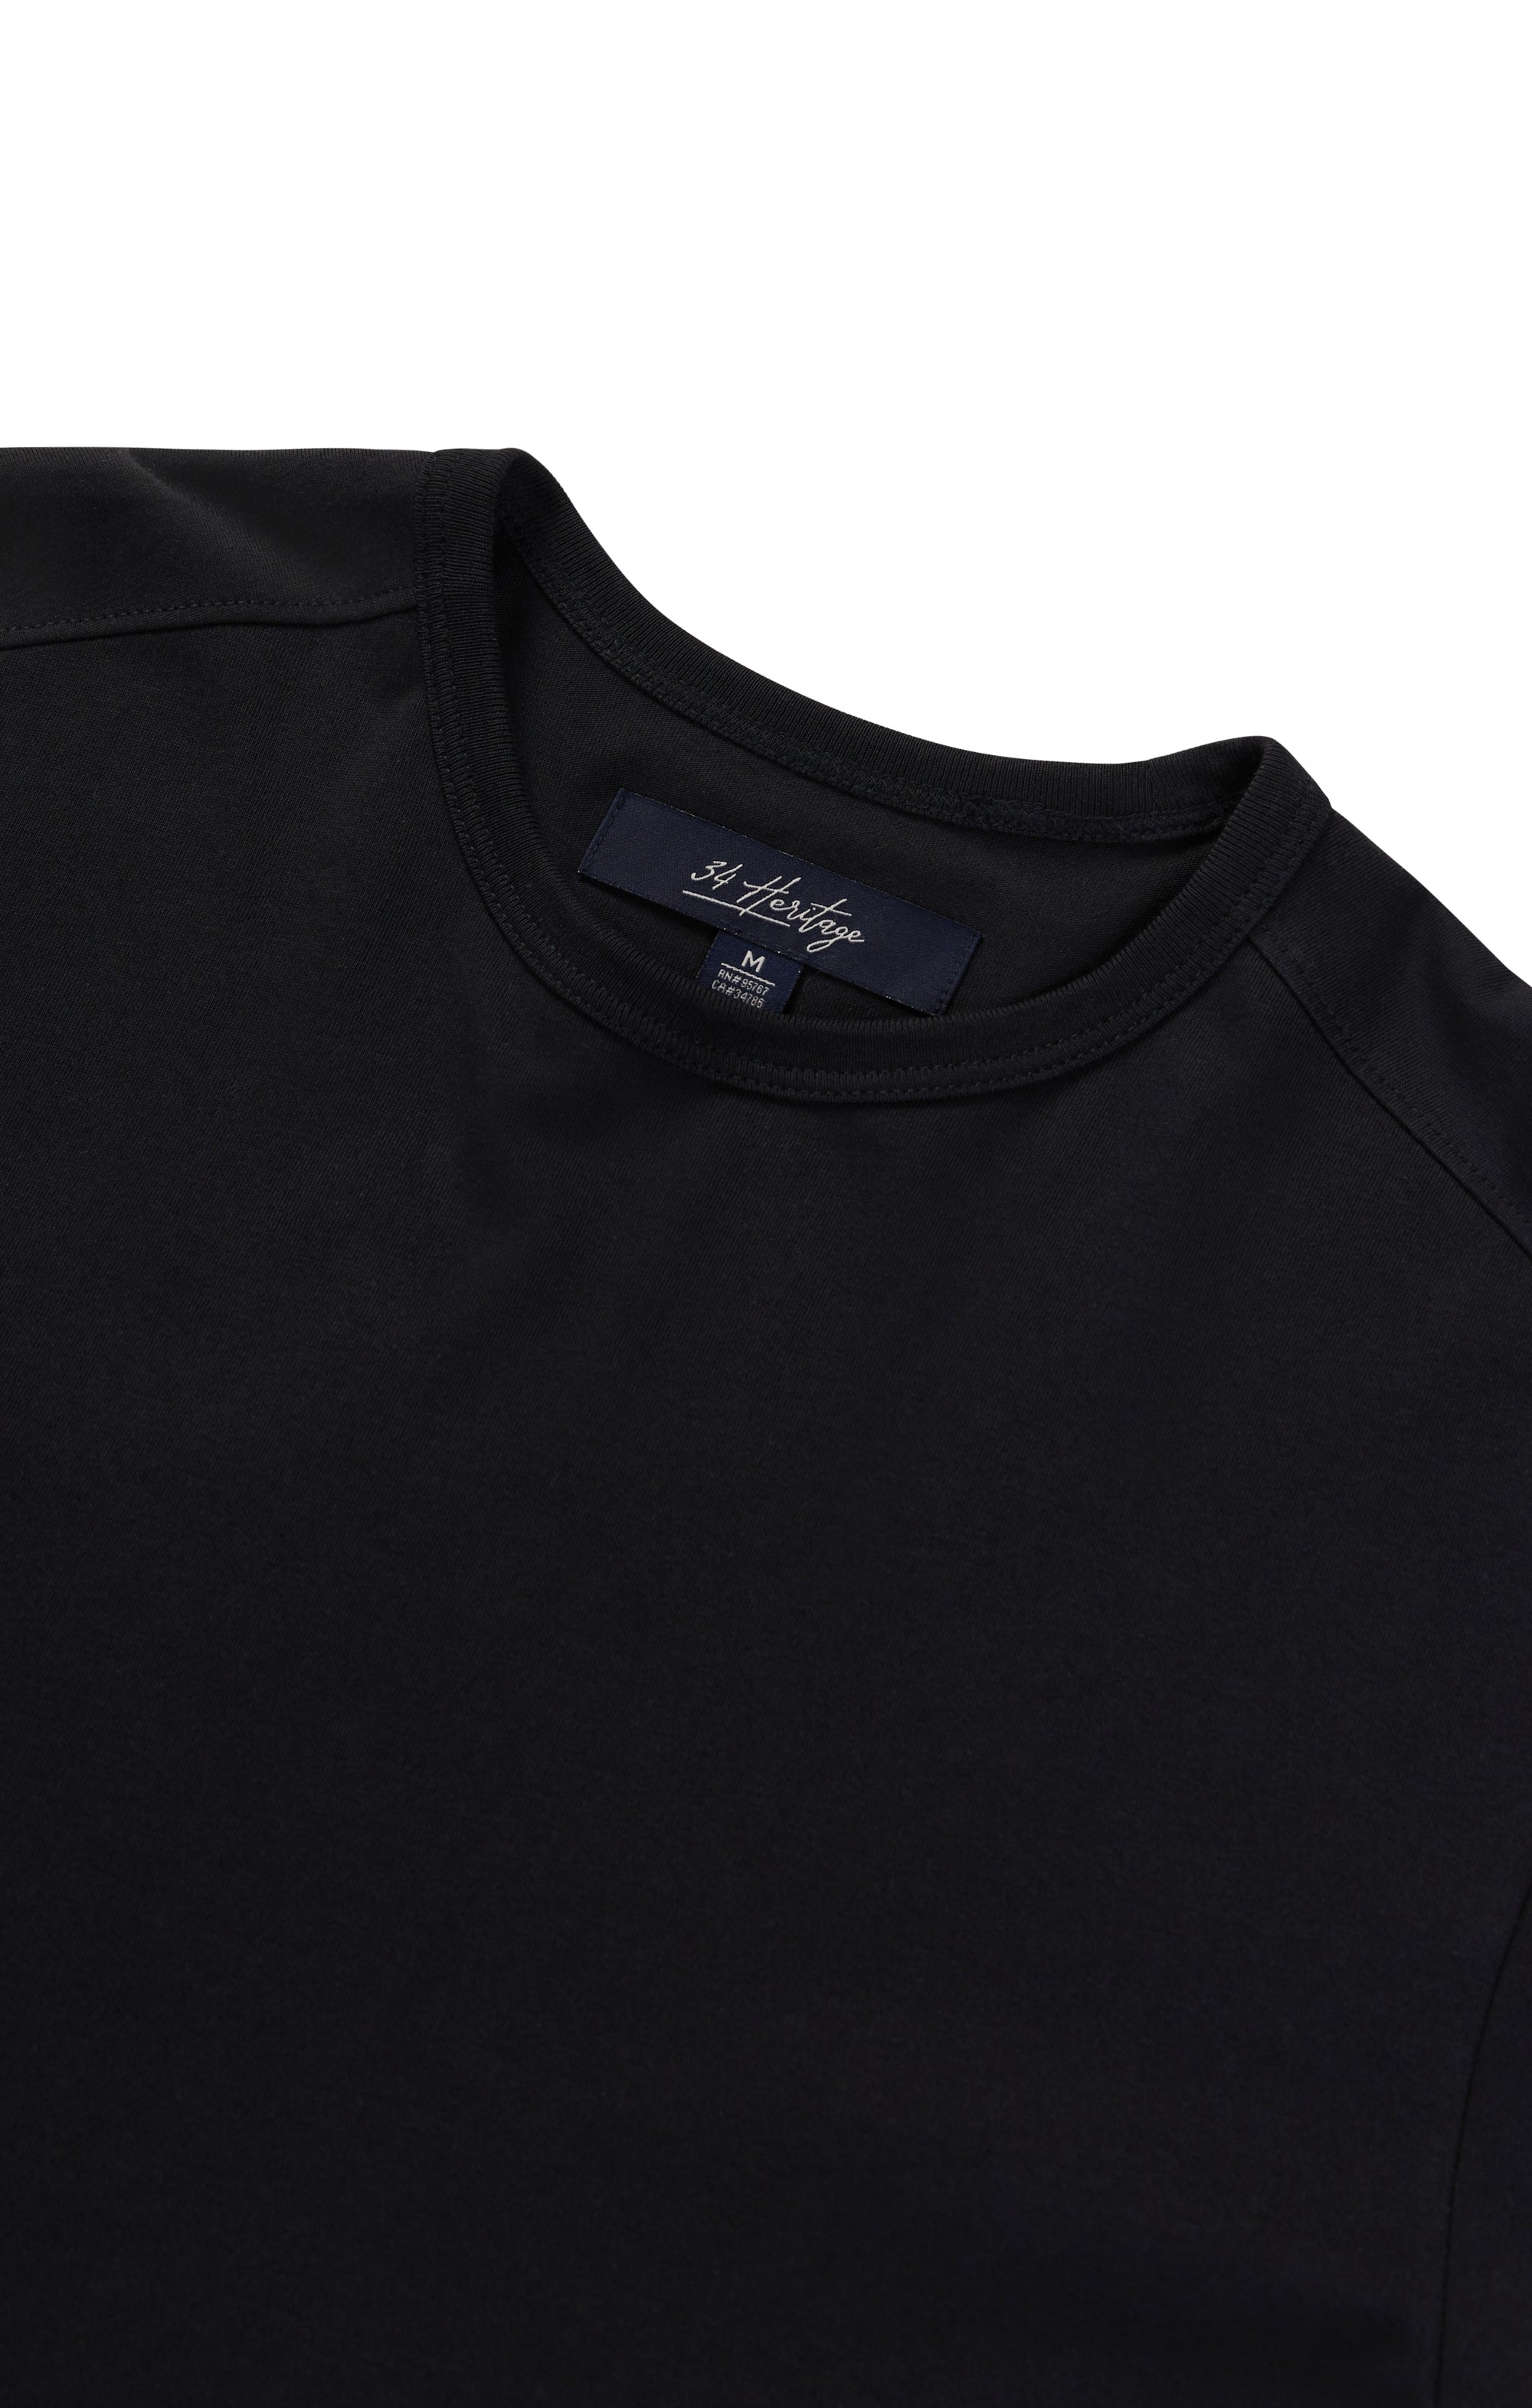 Basic Crew Neck T-Shirt in Black Image 8